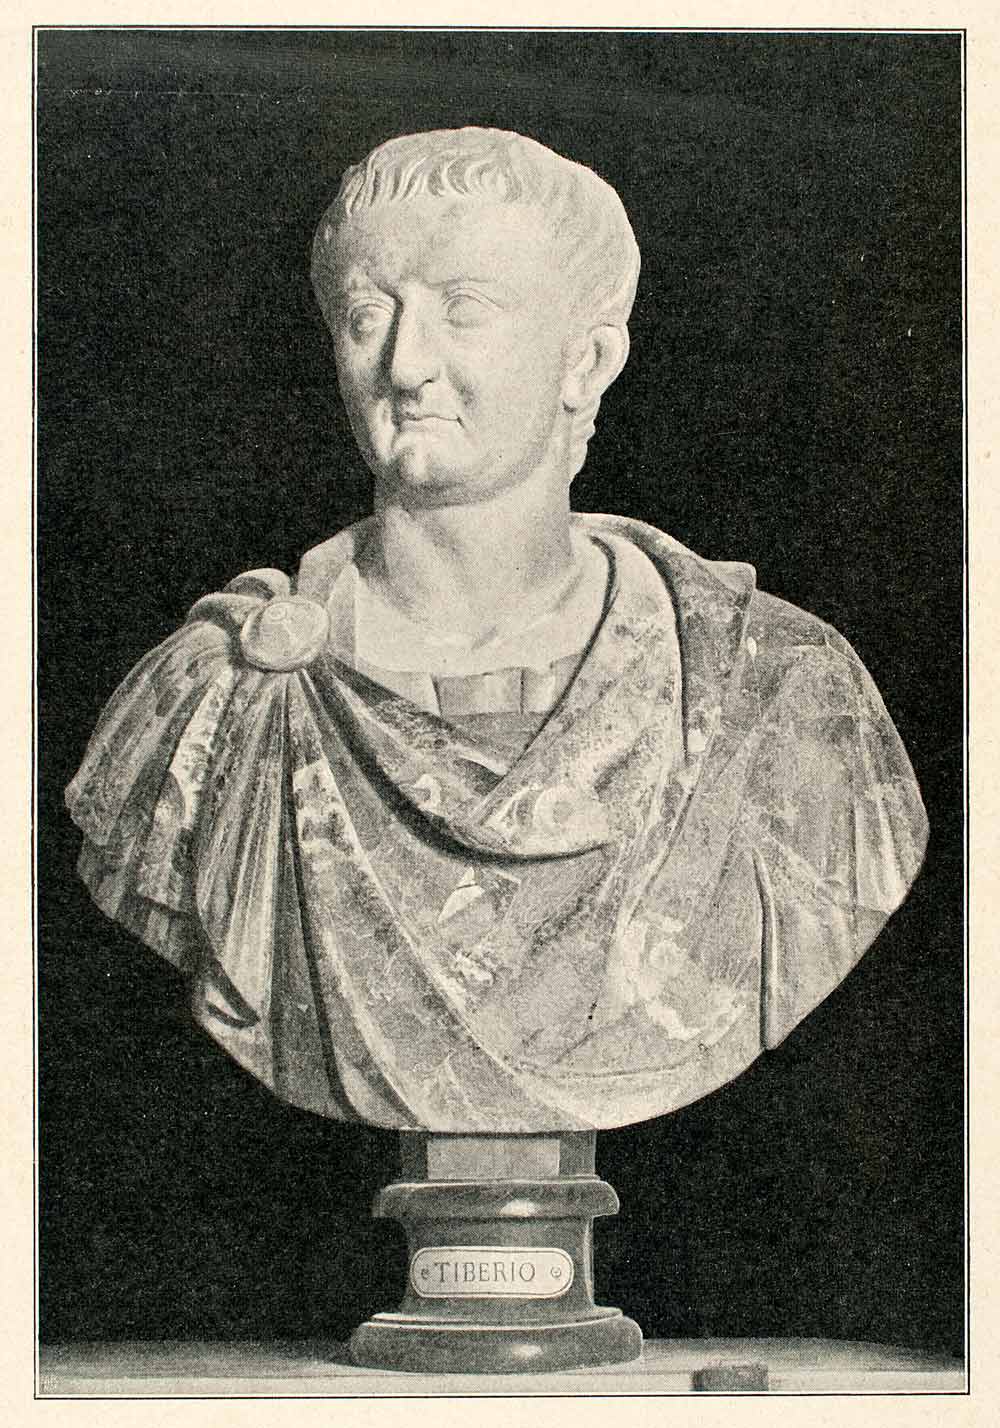 1900 Print Old Tiberius Bust Roman Emperor Rome General Portrait Head Face XGVA6